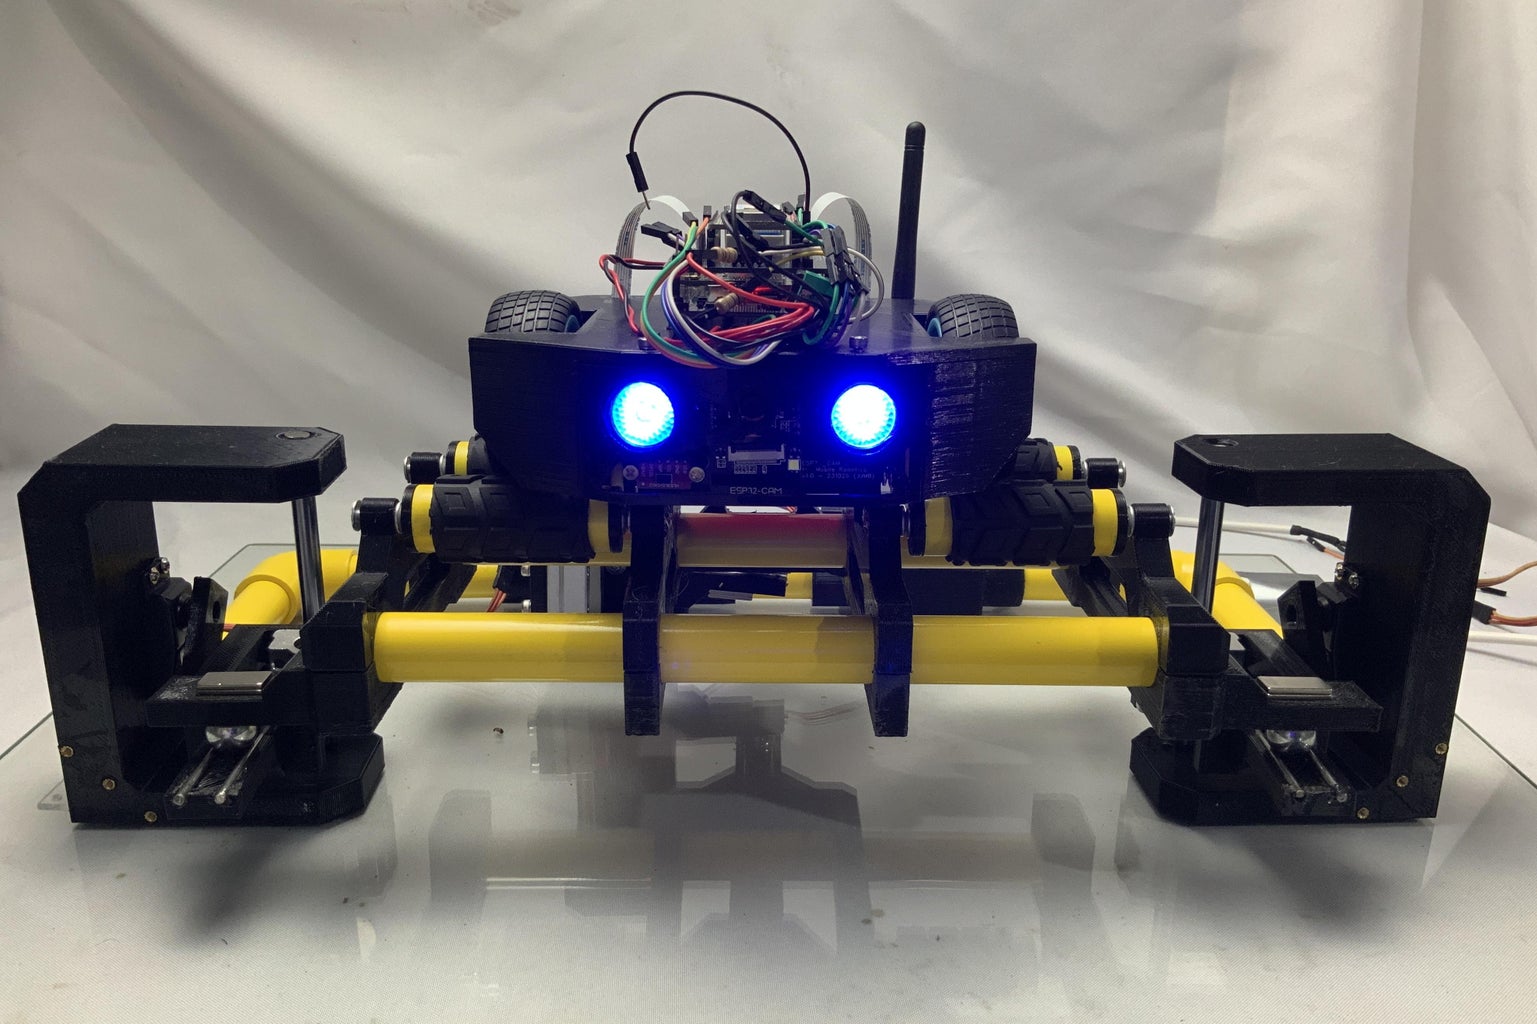 3D Printed Advanced Mobile Robot and Testing Platform